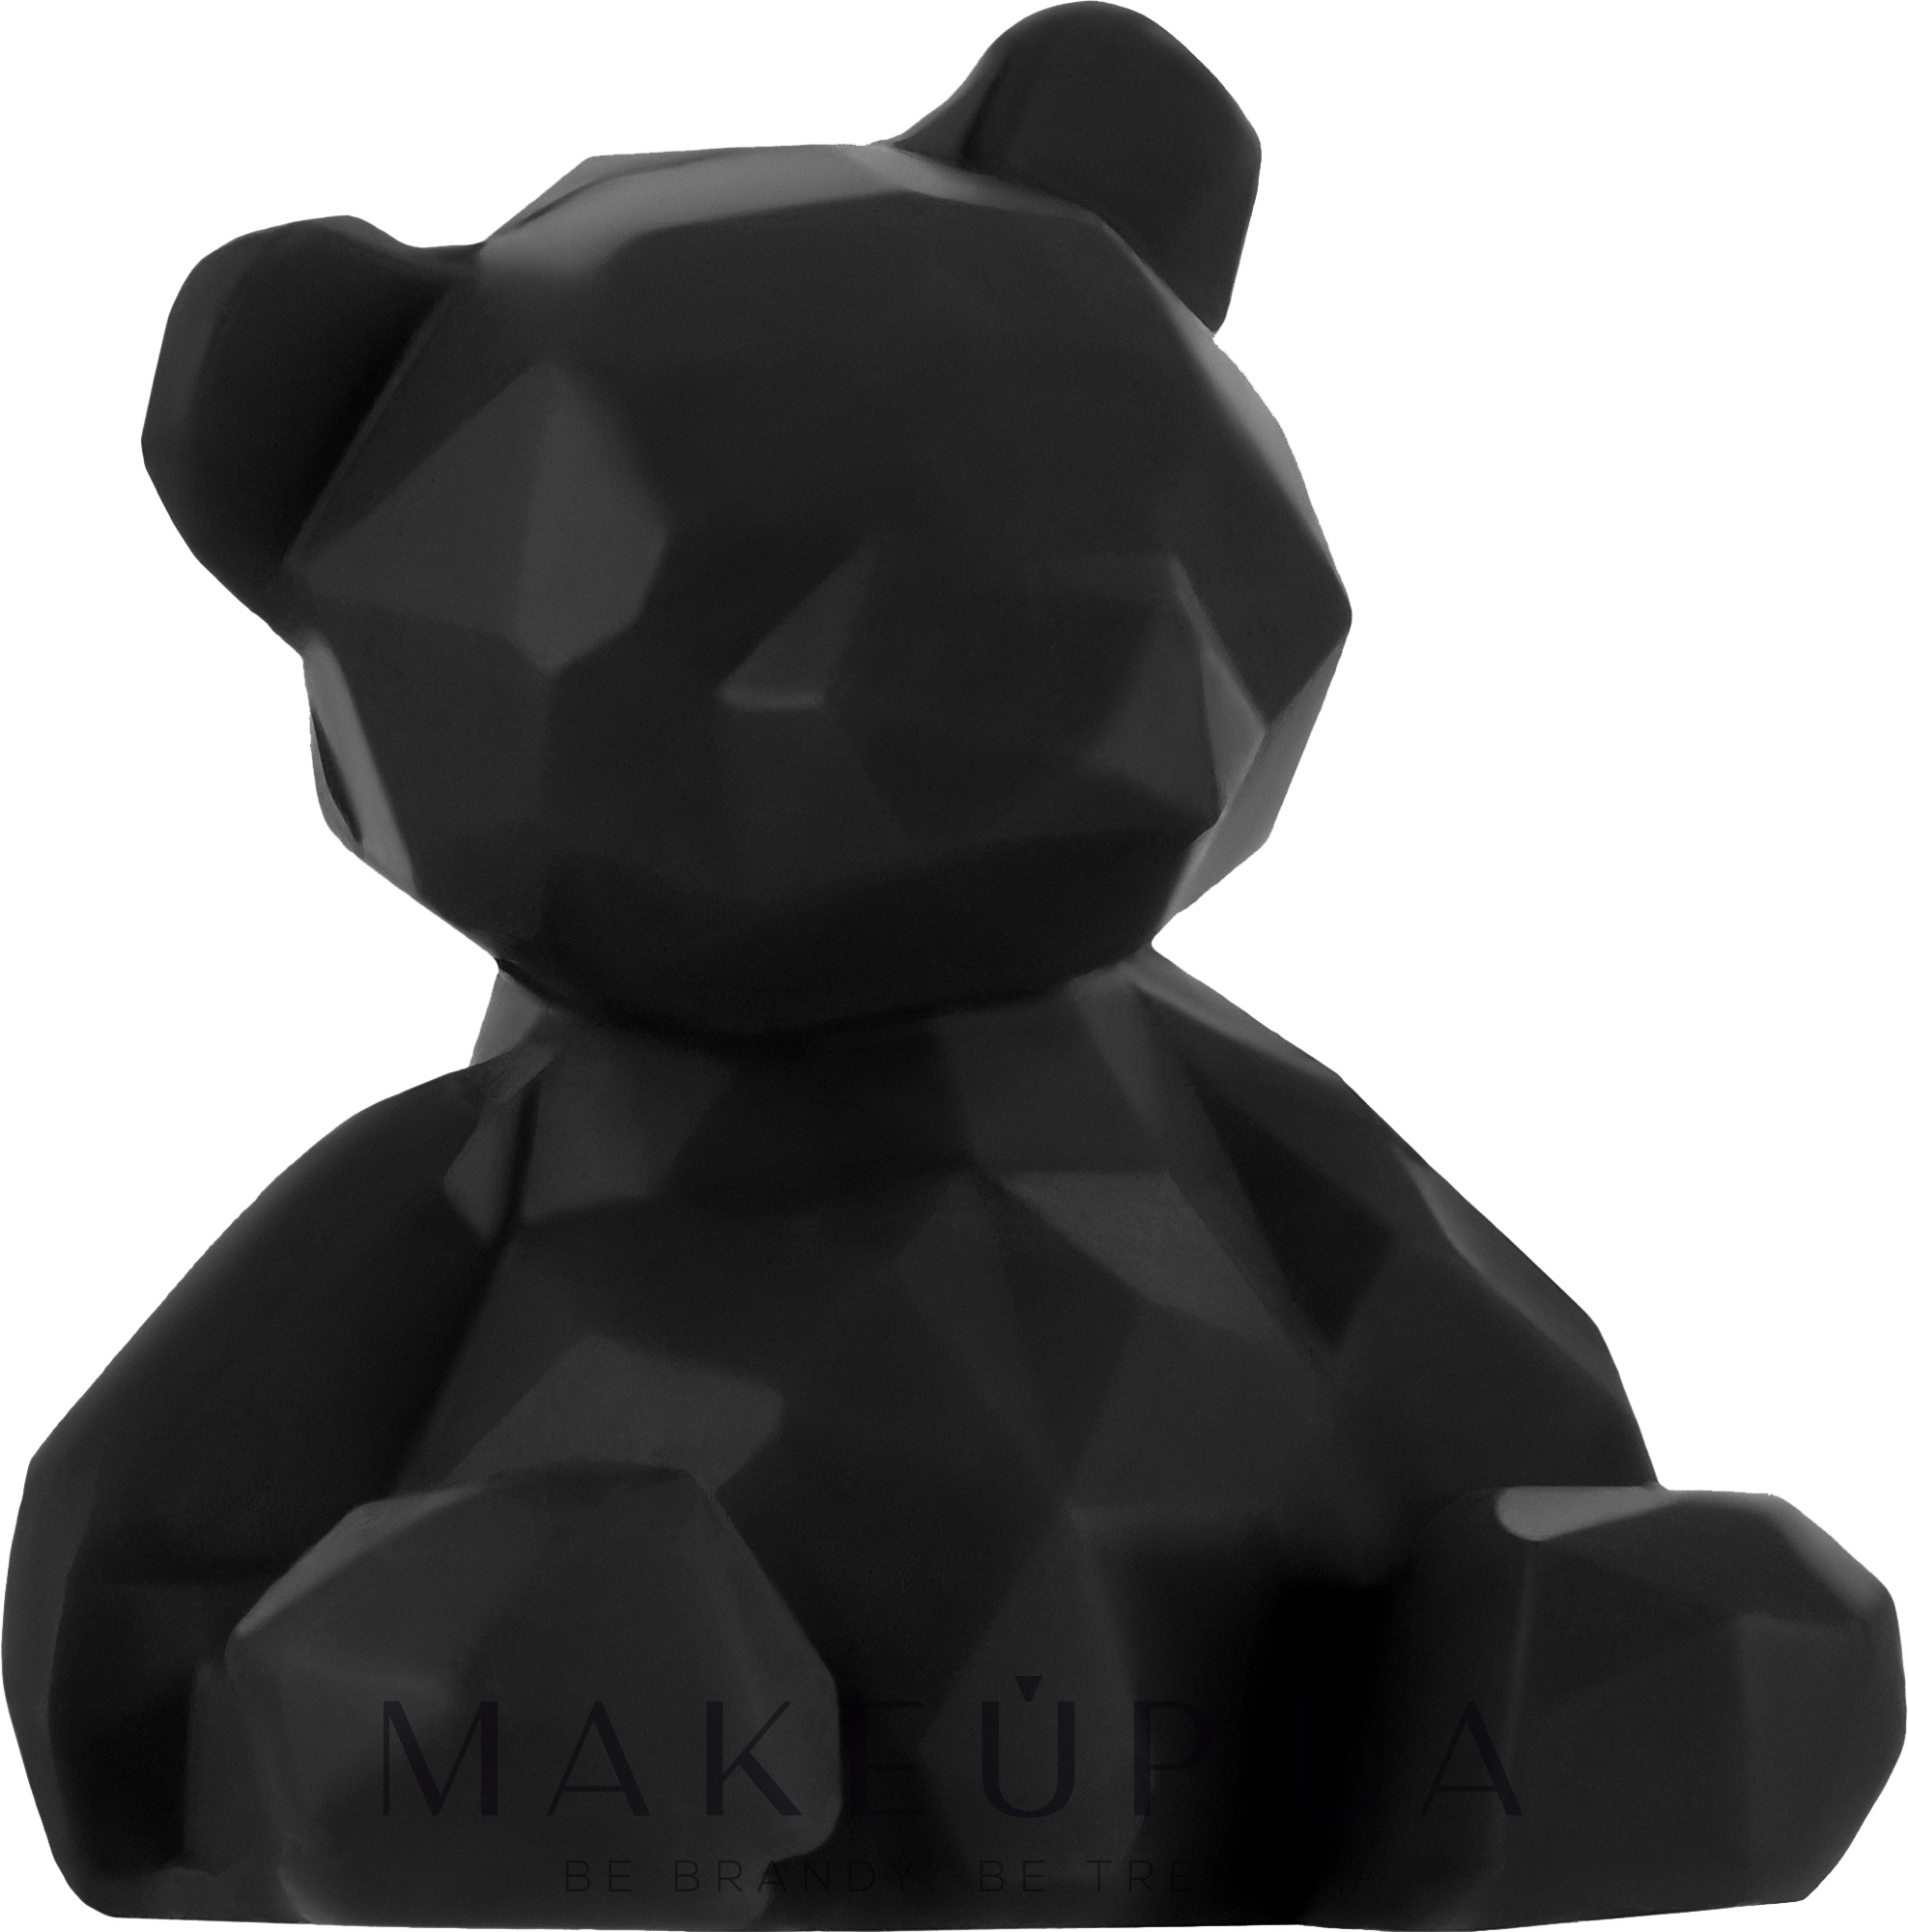 Мило "Геометричний ведмедик", чорний  - Dushka — фото 60g